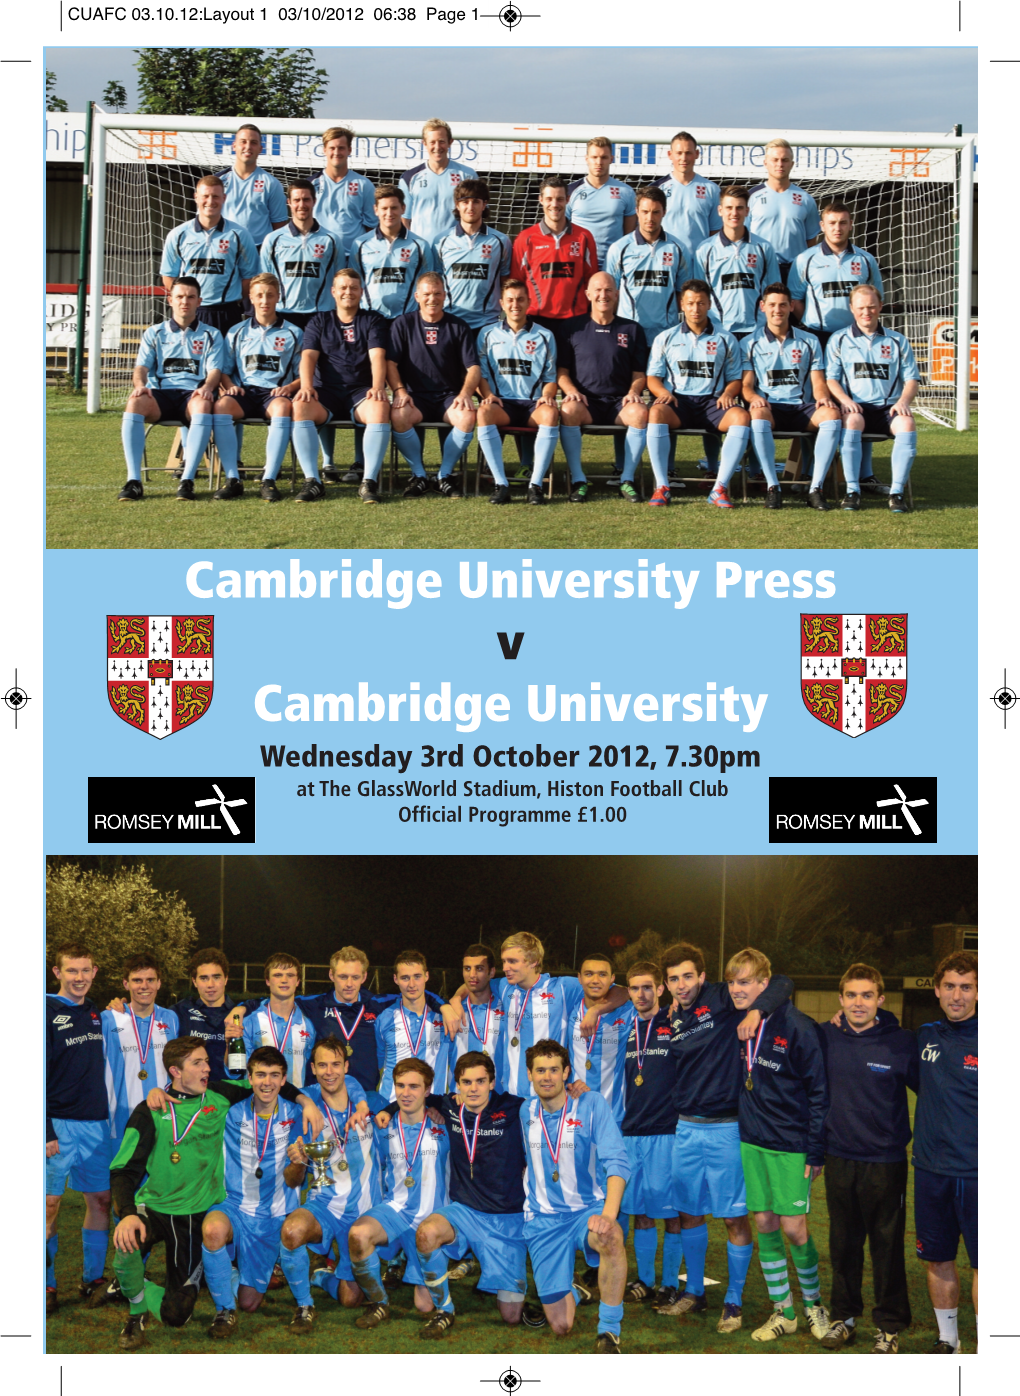 History of Football at Cambridge